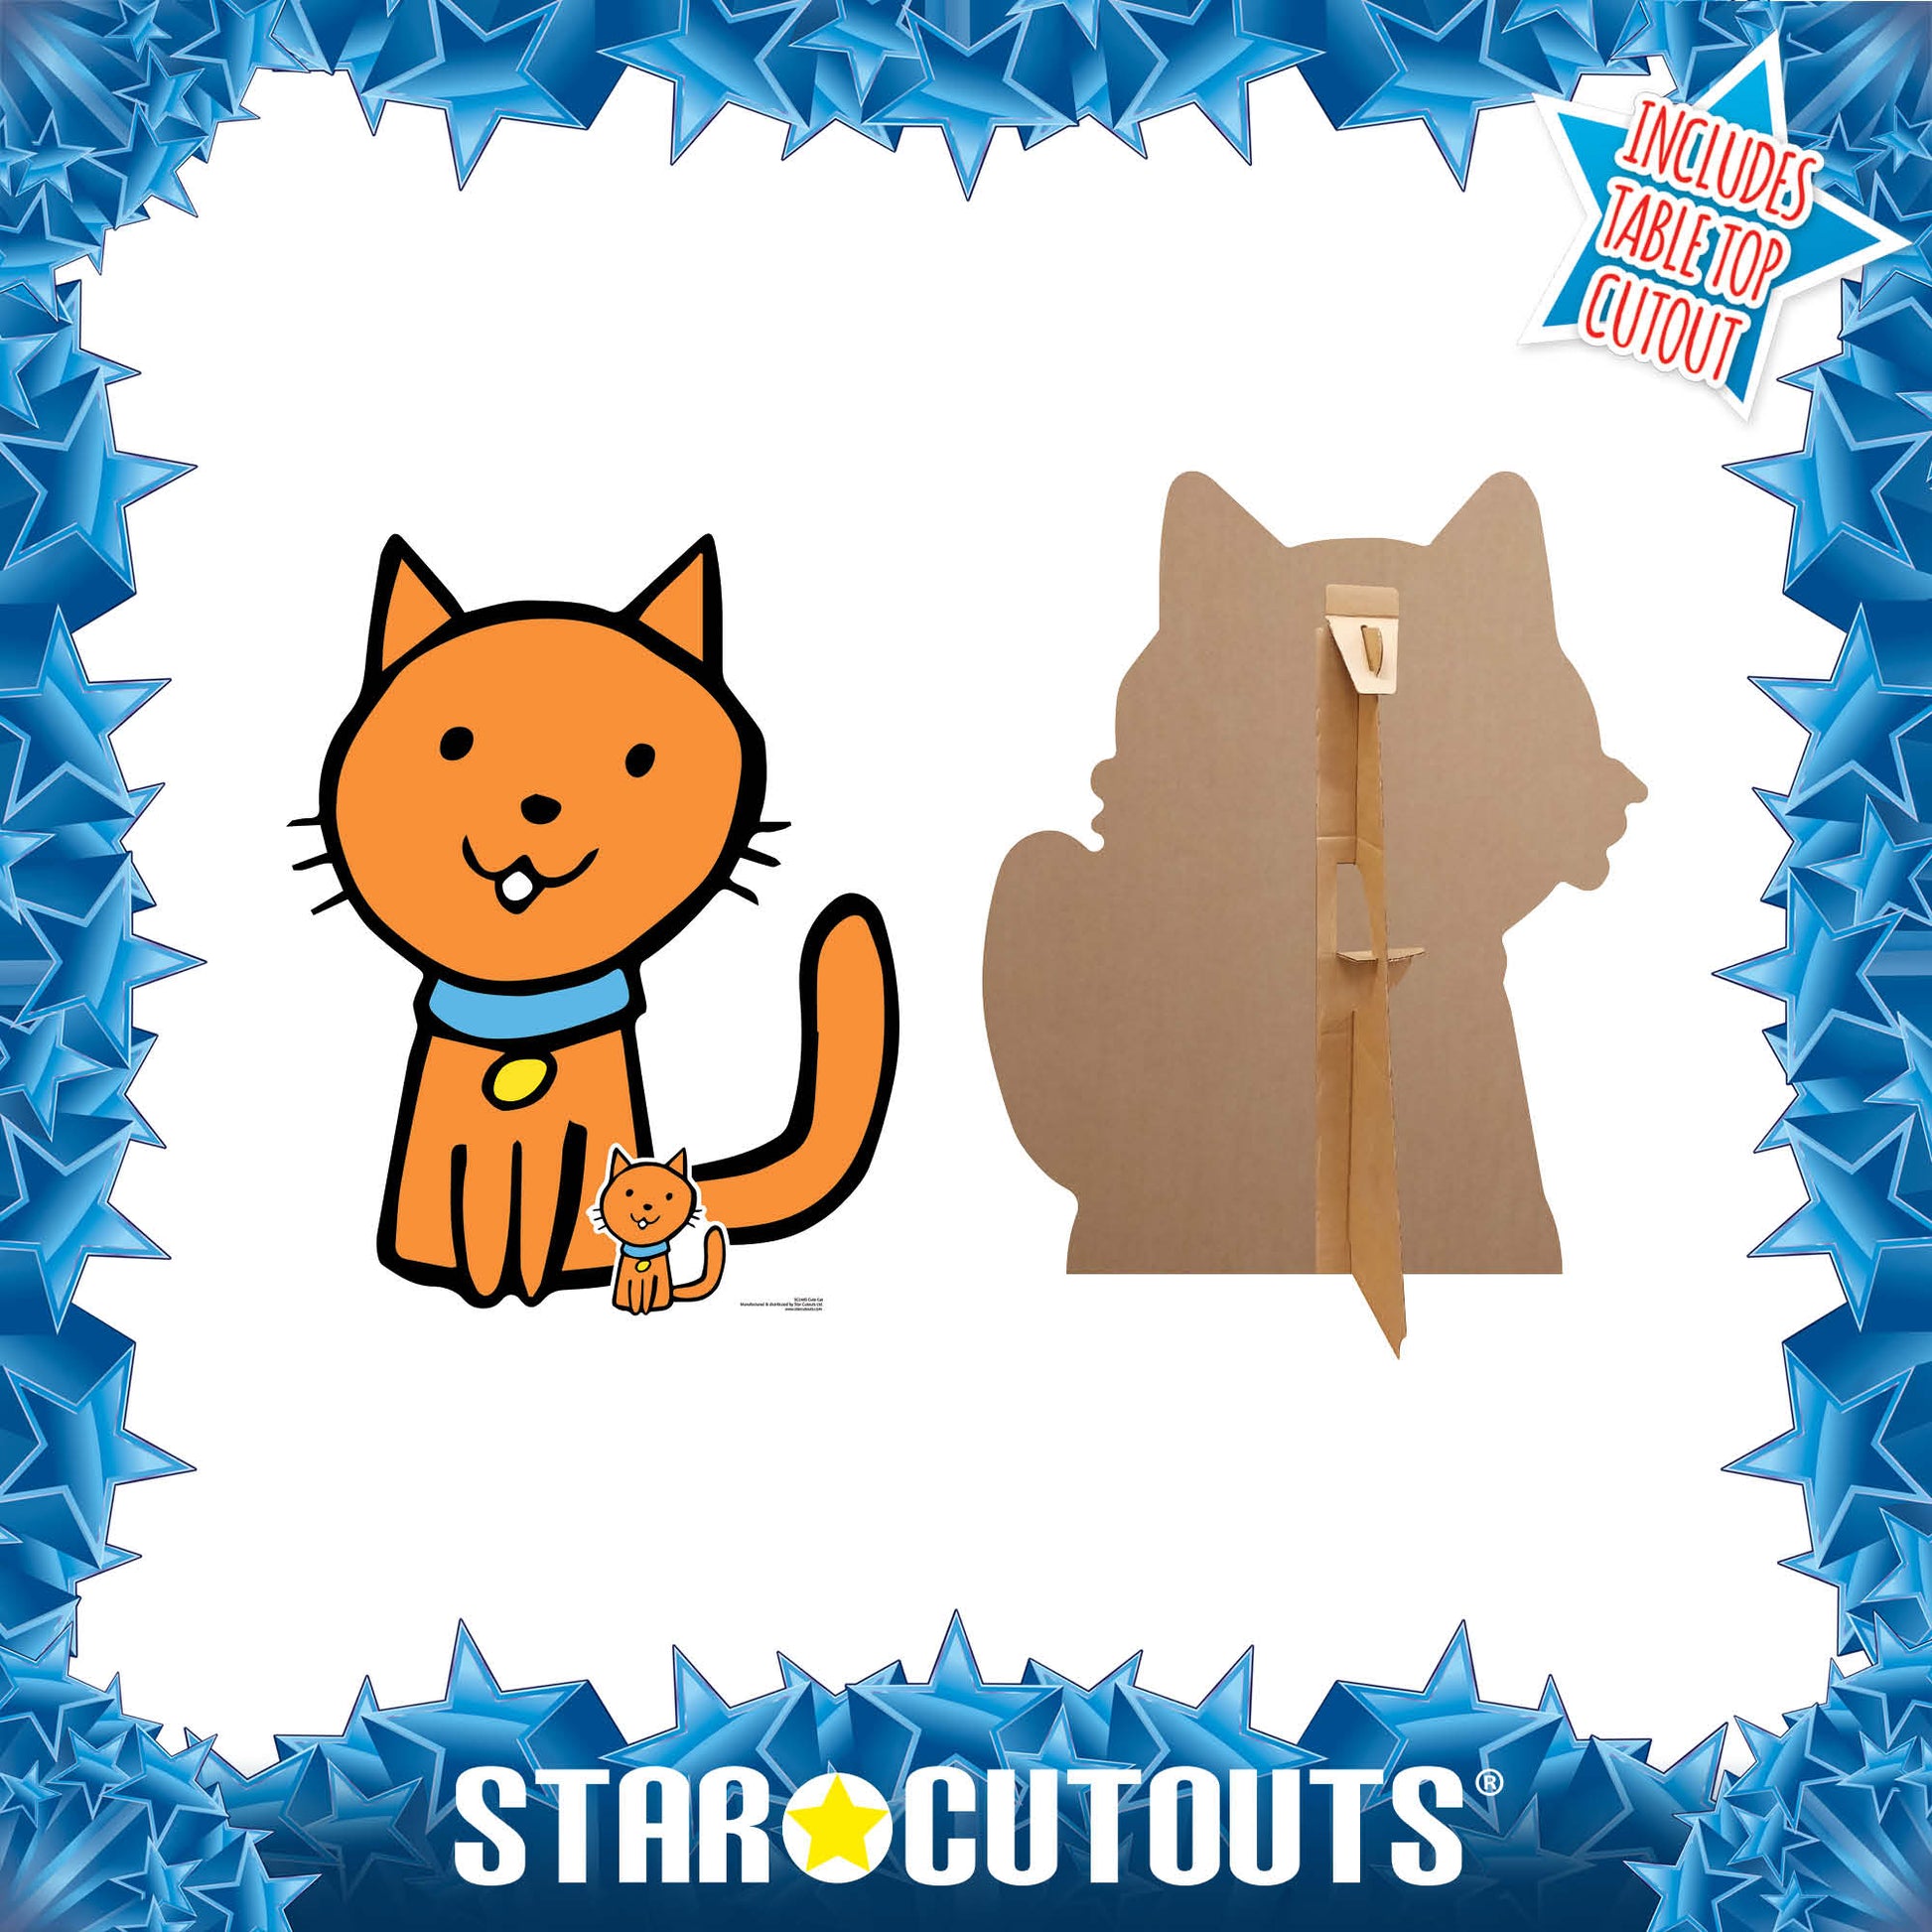 SC1445 Cute Cat Farmyard Animal Cardboard Cut Out Height 87cm - Star Cutouts